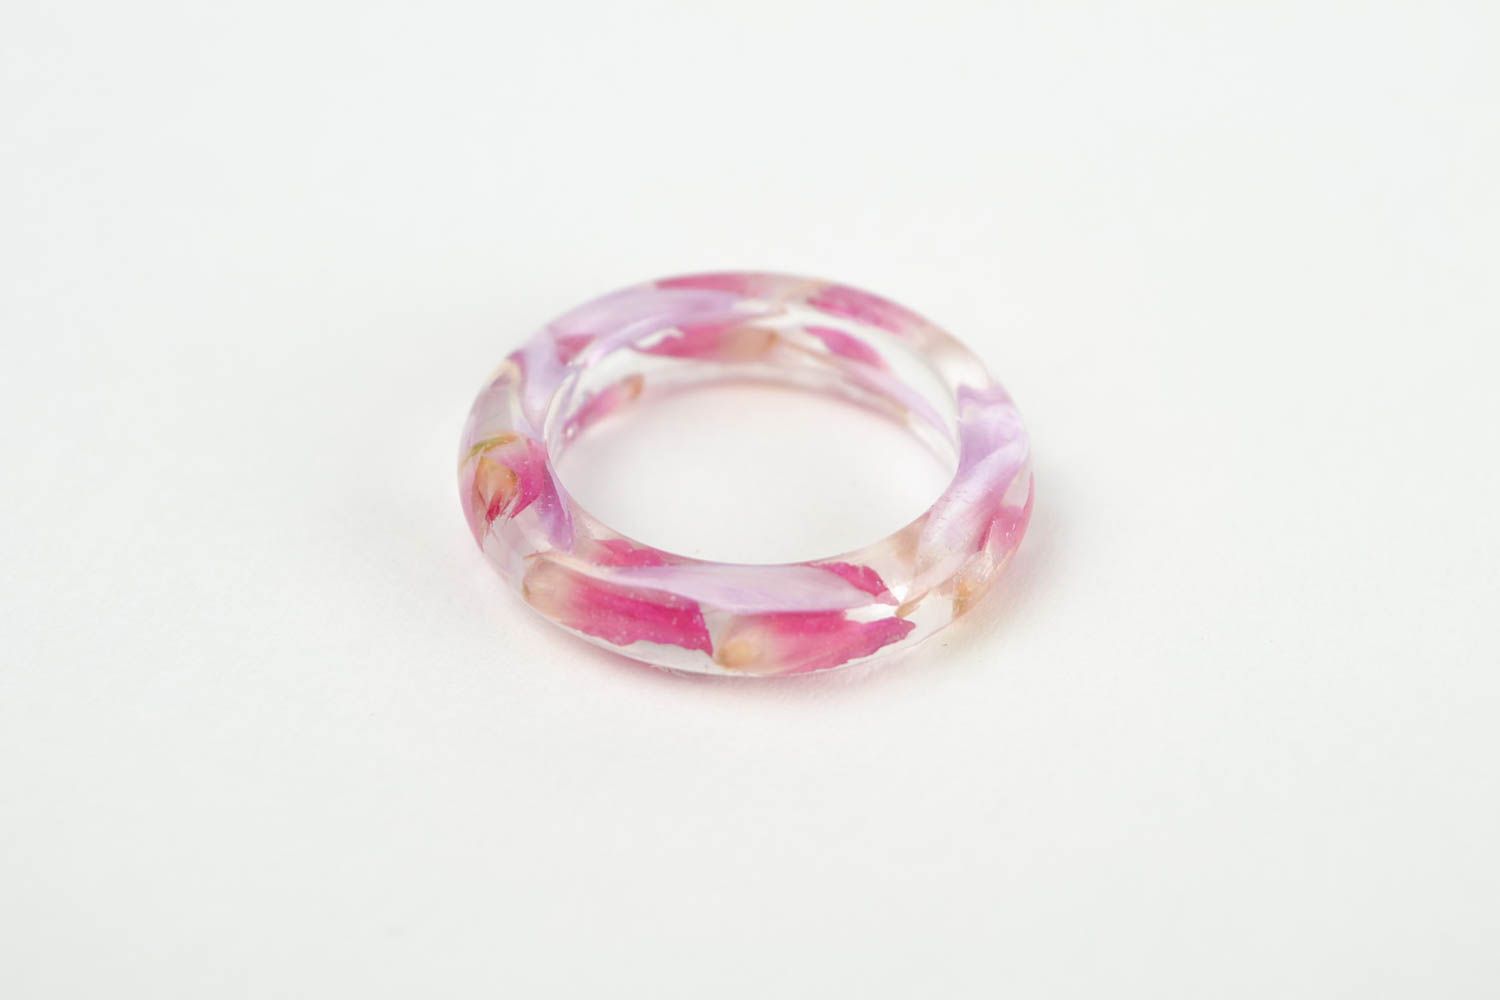 Handmade ring designer accessory gift ideas unusual gift for women epoxy ring photo 3